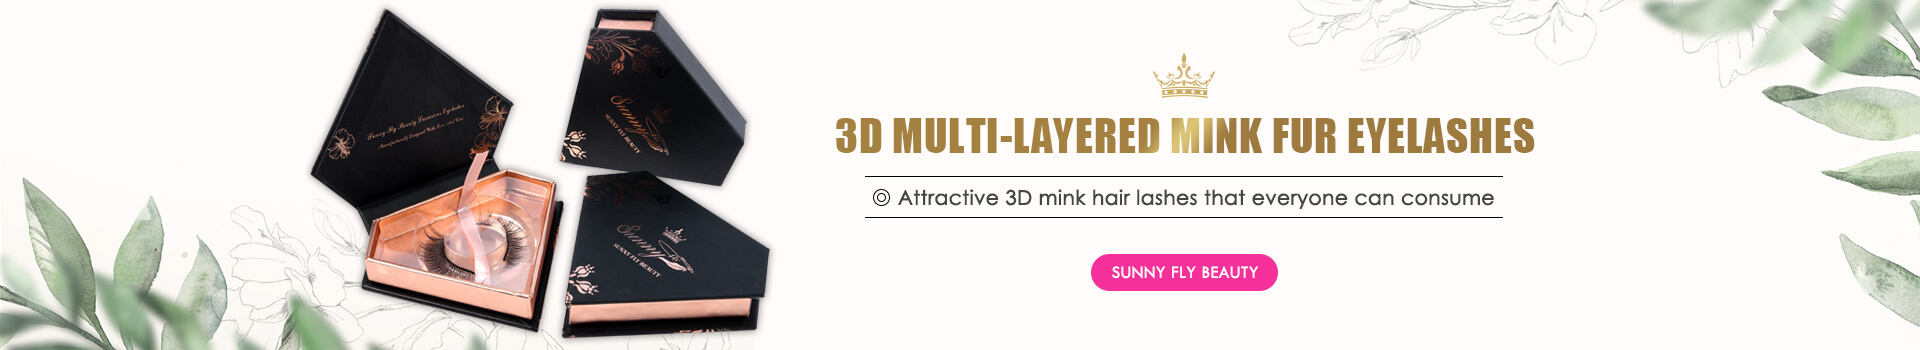 3D Multi-layered Mink Fur Eyelashes MG03